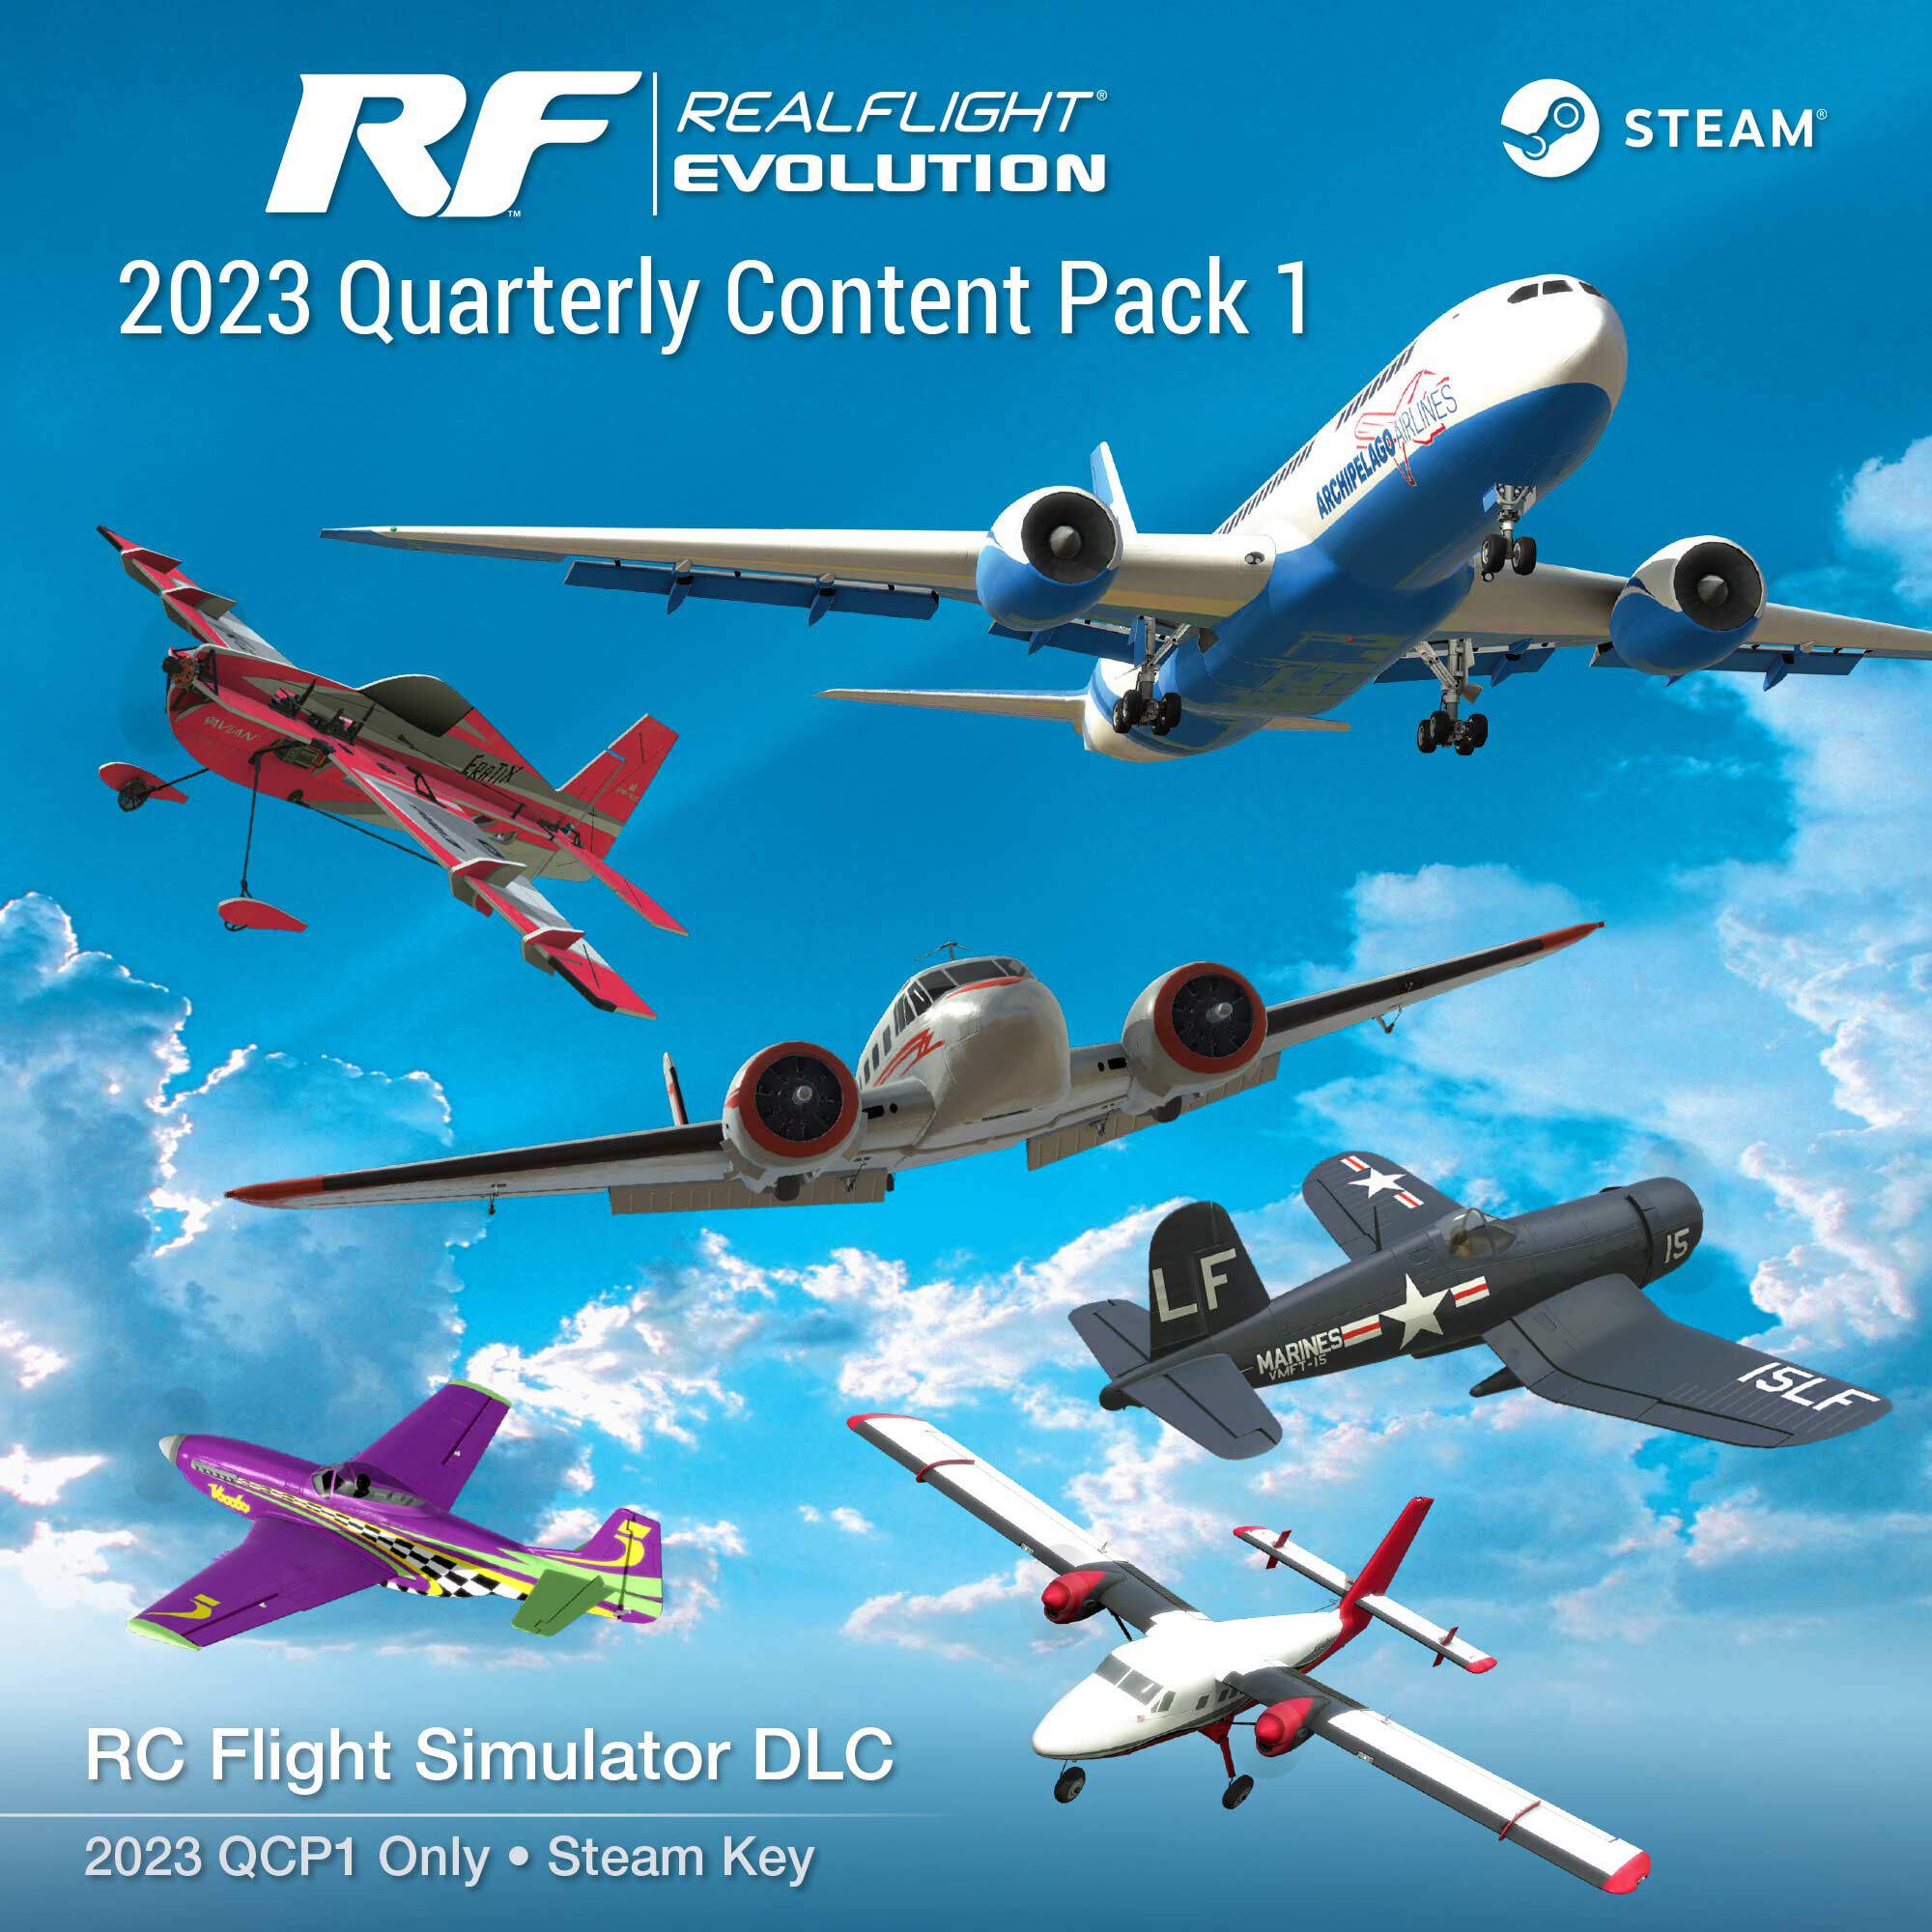 Shop RealFlight RC Flight Simulators and Products | RealFlight